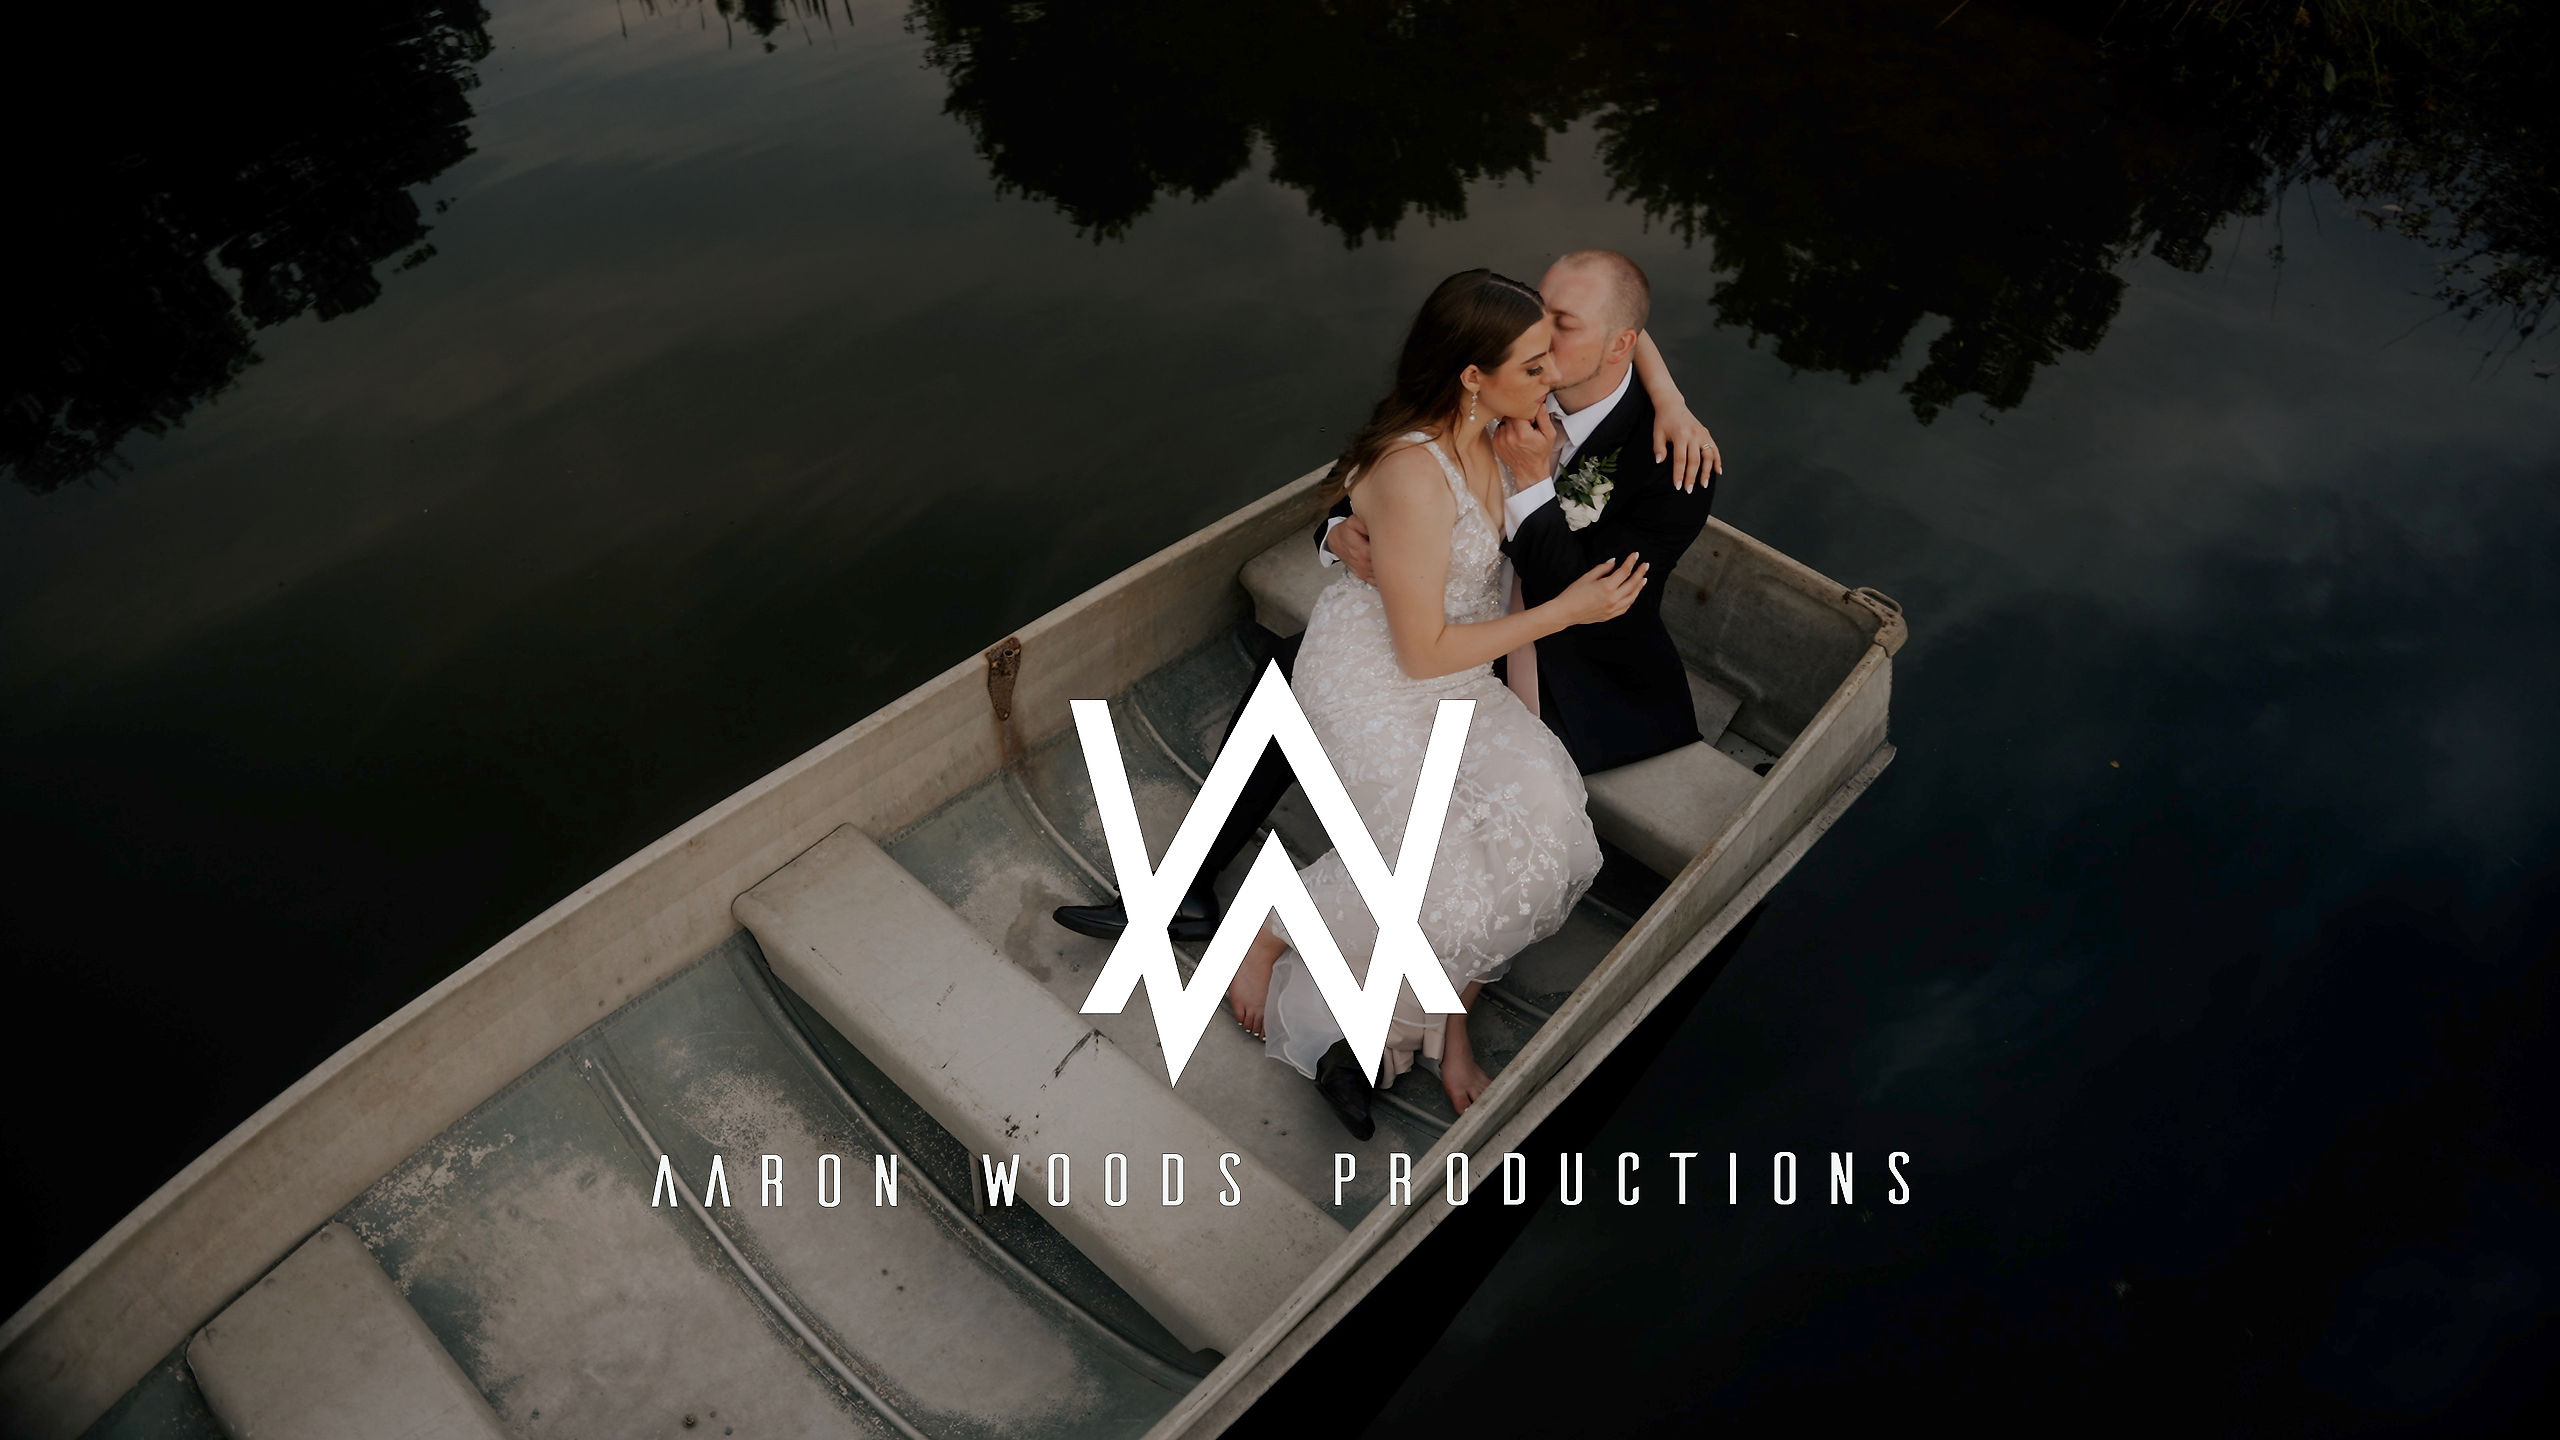 Aaron Woods Productions